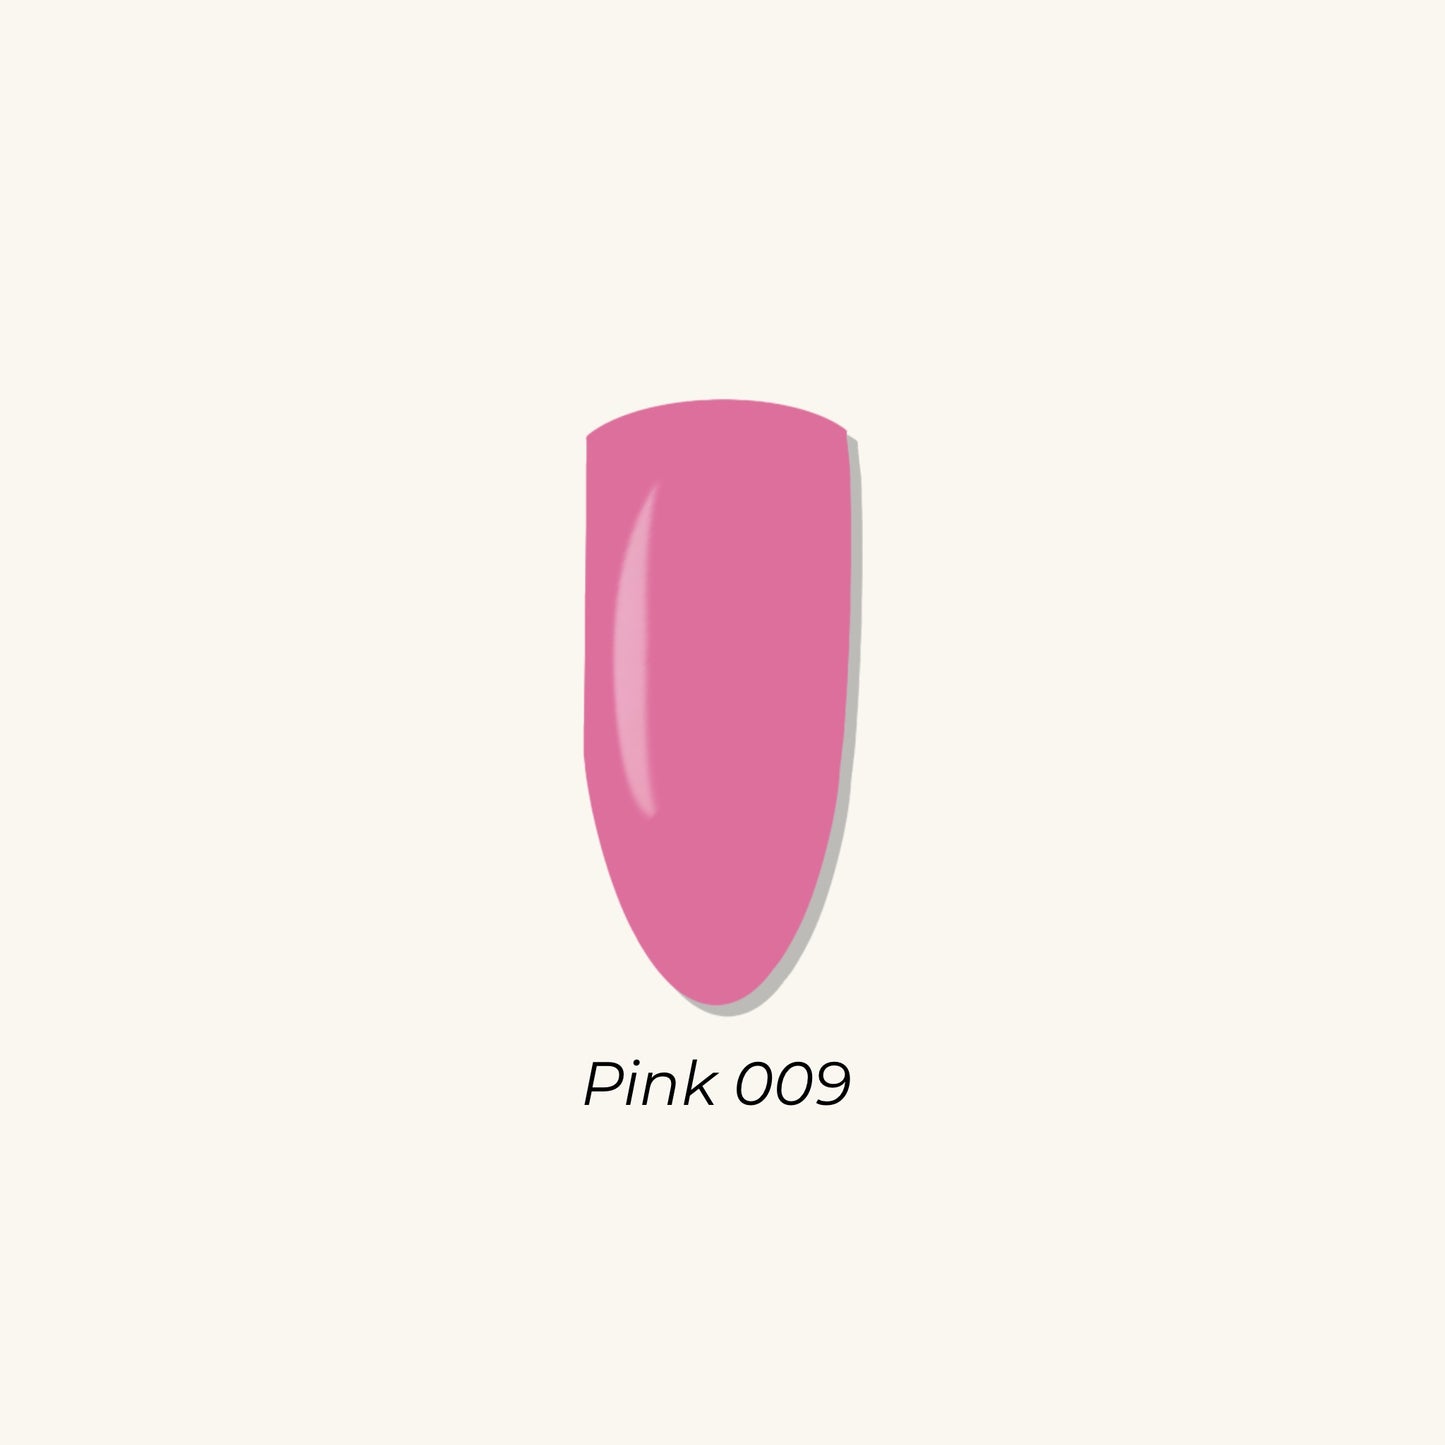 Pink 009